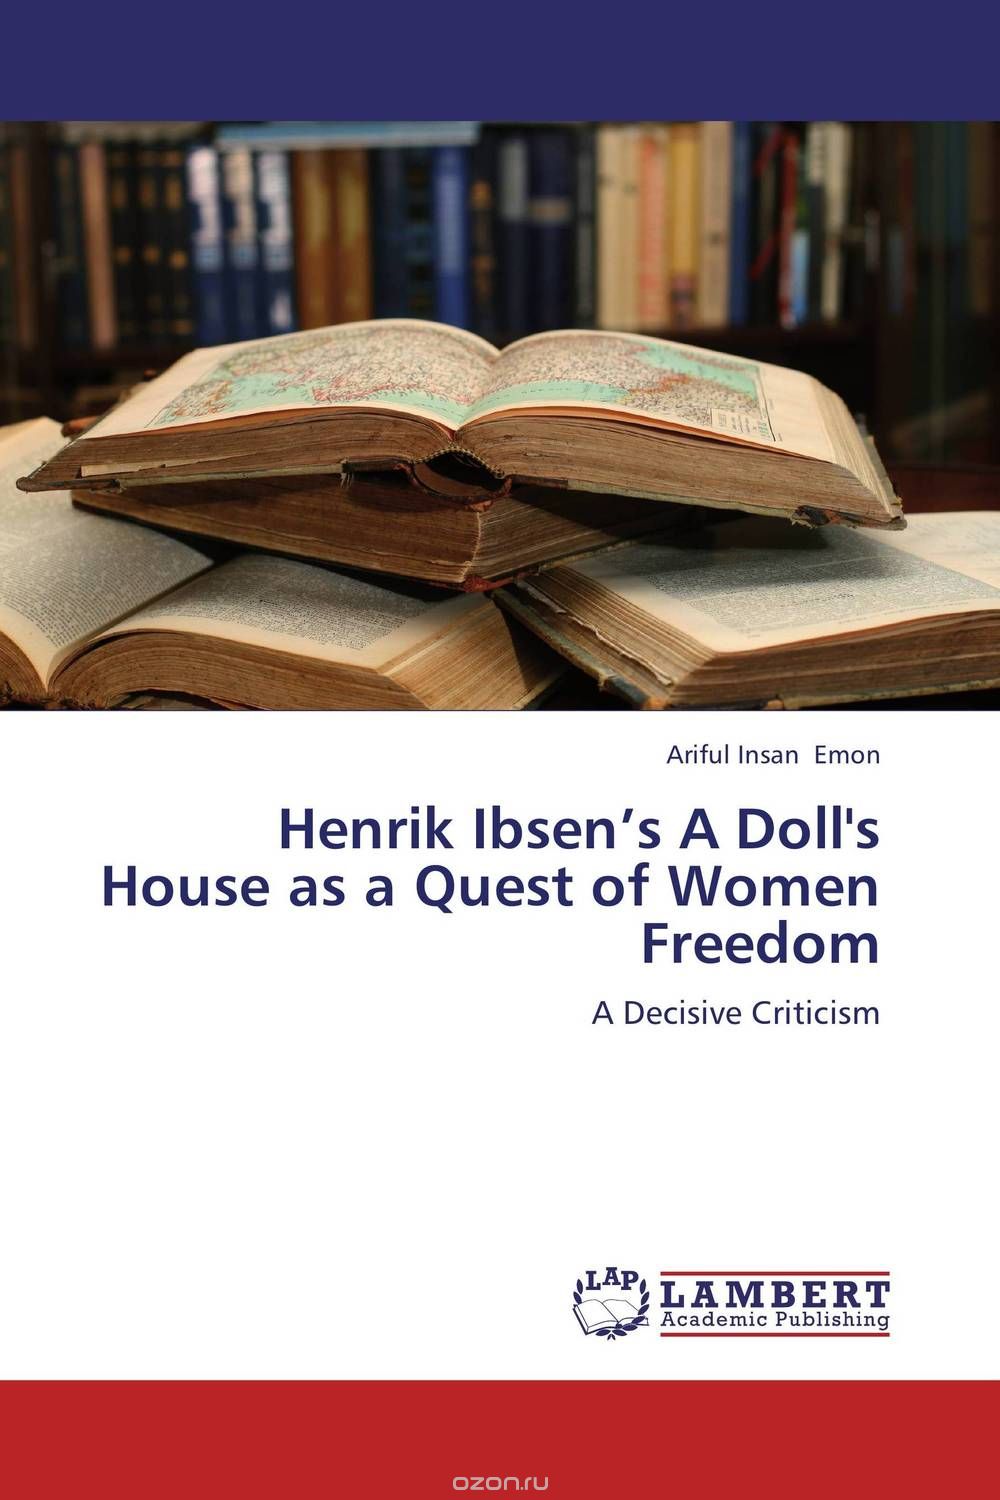 Скачать книгу "Henrik Ibsen’s A Doll's House as a Quest of Women Freedom"